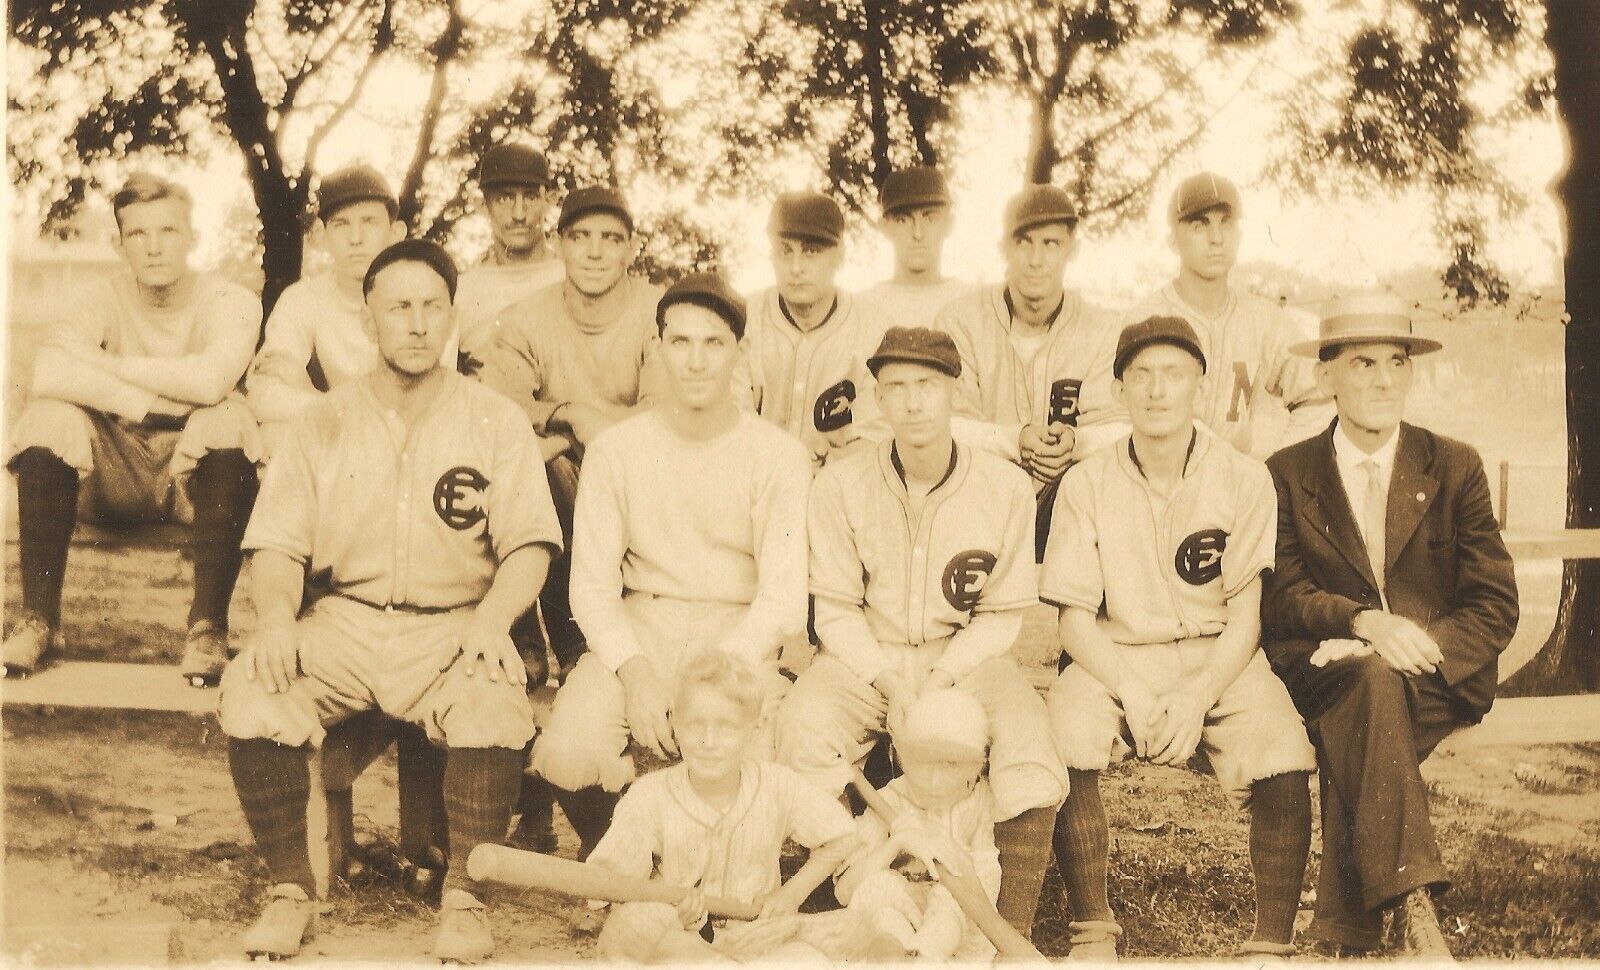 Rare Old Vintage Antique RPPC Real Photo Postcard 1920s Baseball Team Photograph